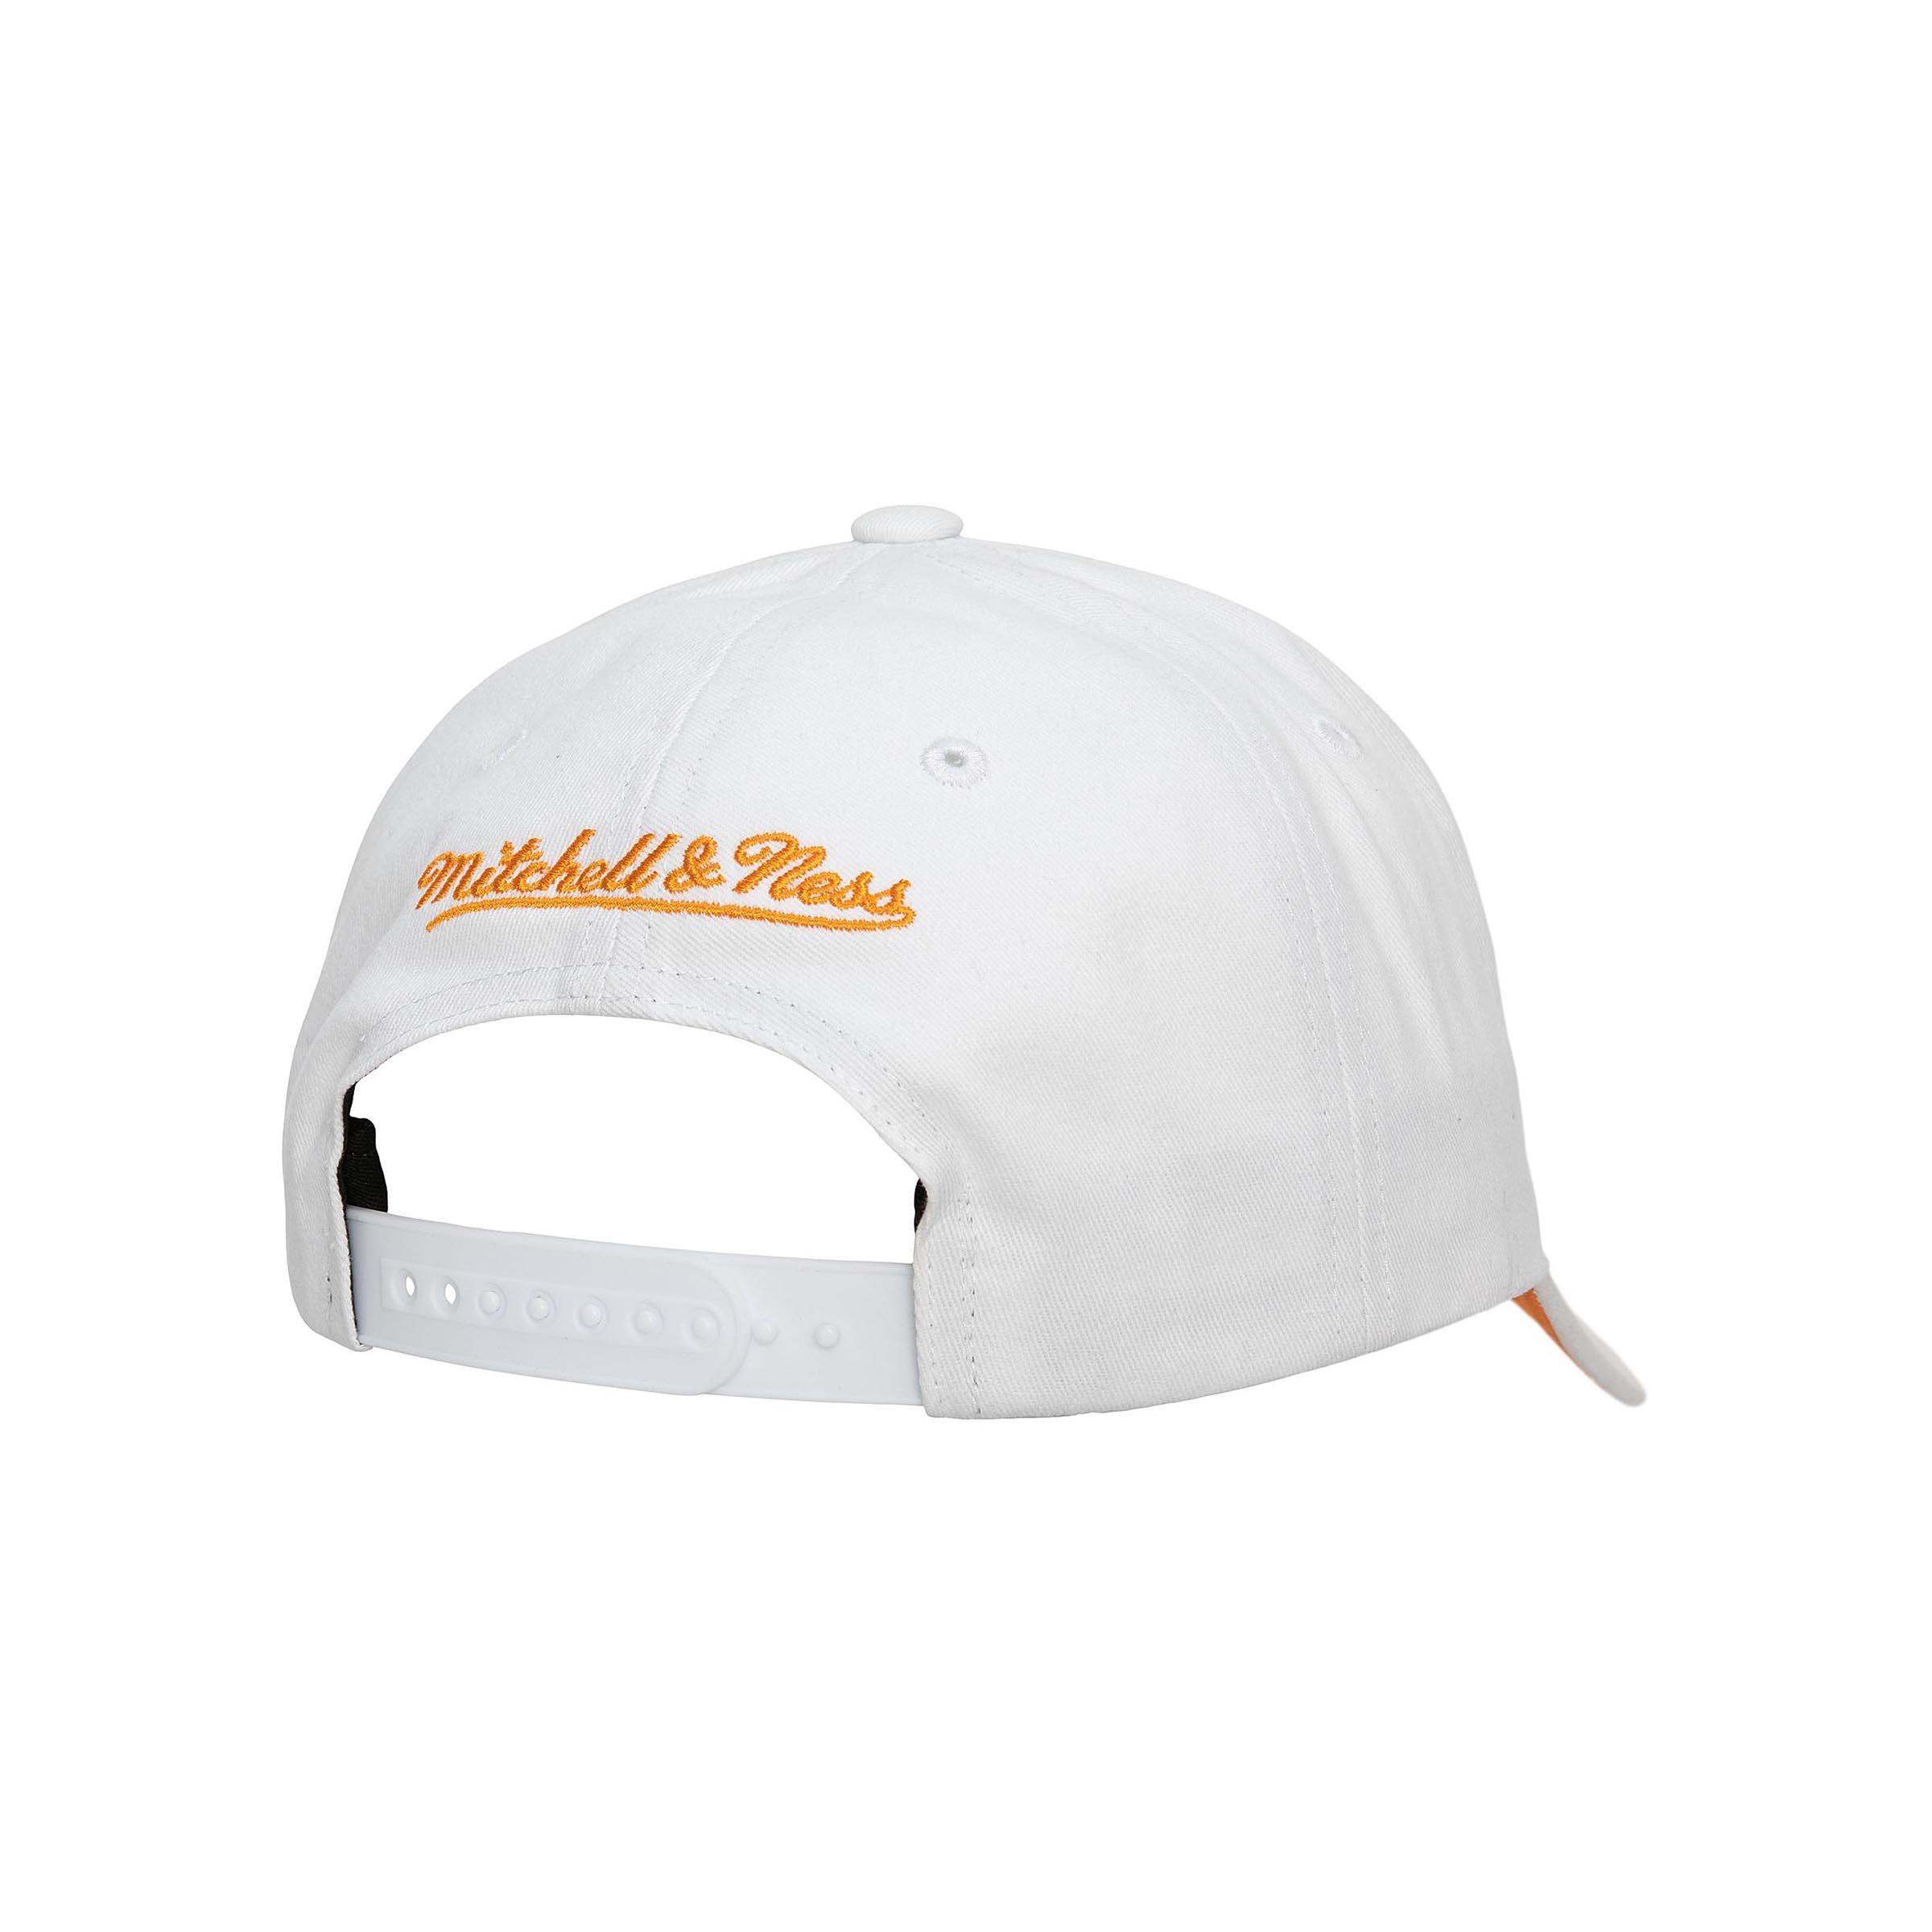 Lids Tennessee Volunteers Mitchell & Ness Logo Snapback Hat - Tennessee  Orange/Black